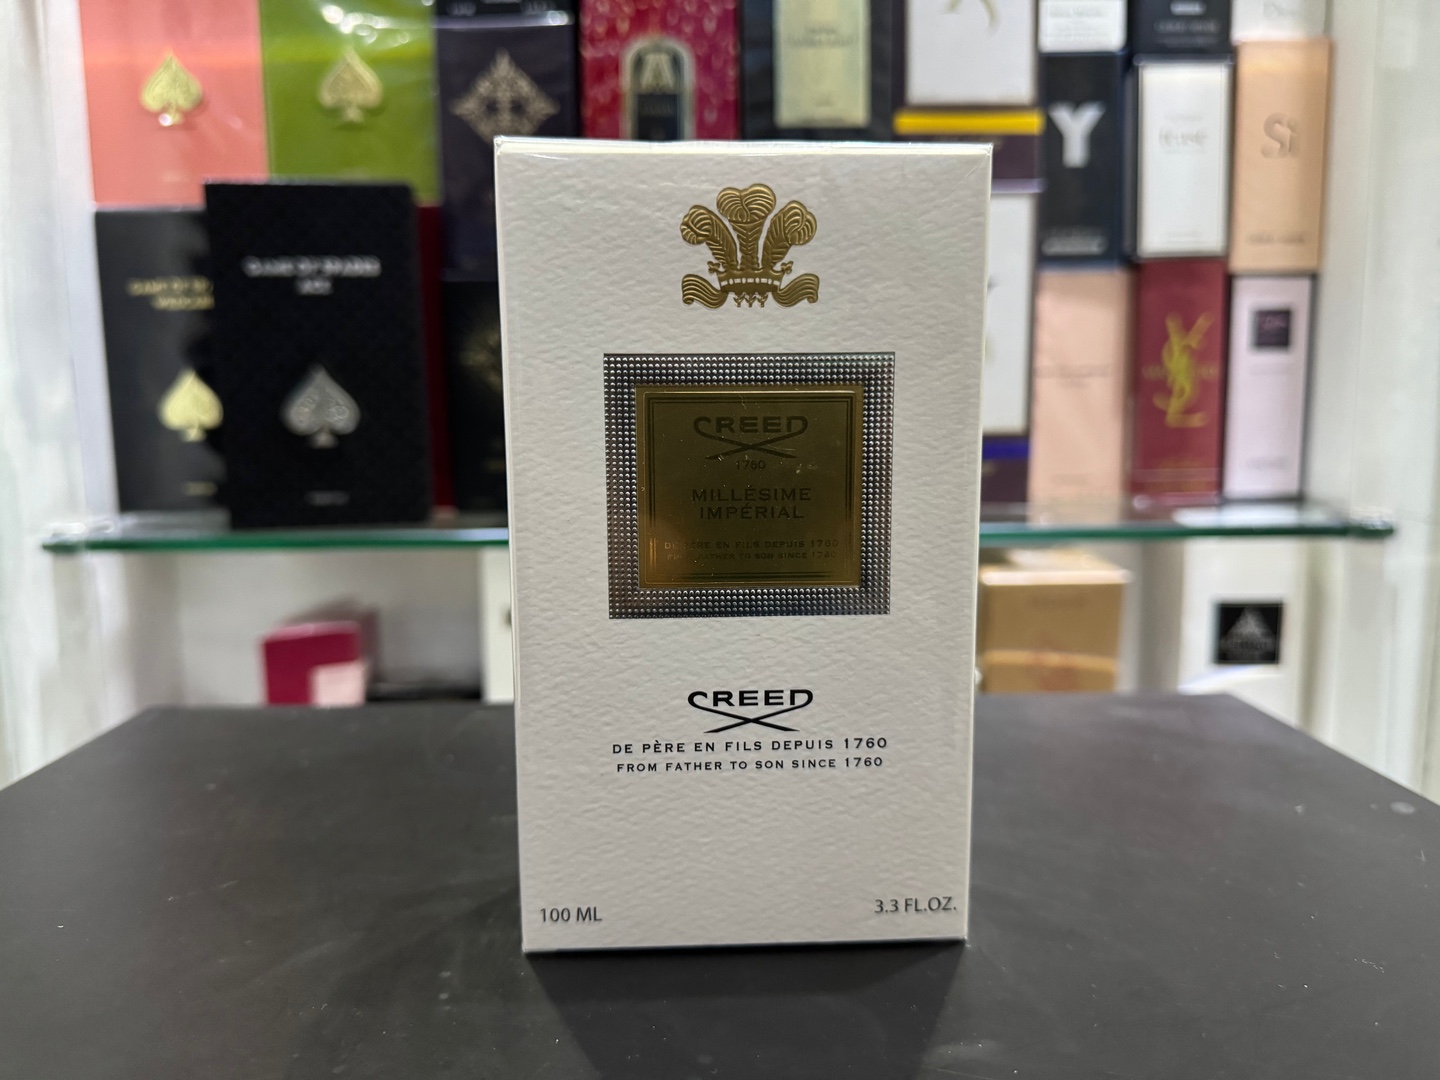 joyas, relojes y accesorios - Perfume Creed imperial Millesime 100ML Nuevo, Autentico, RD$ 18,500 NEG 0